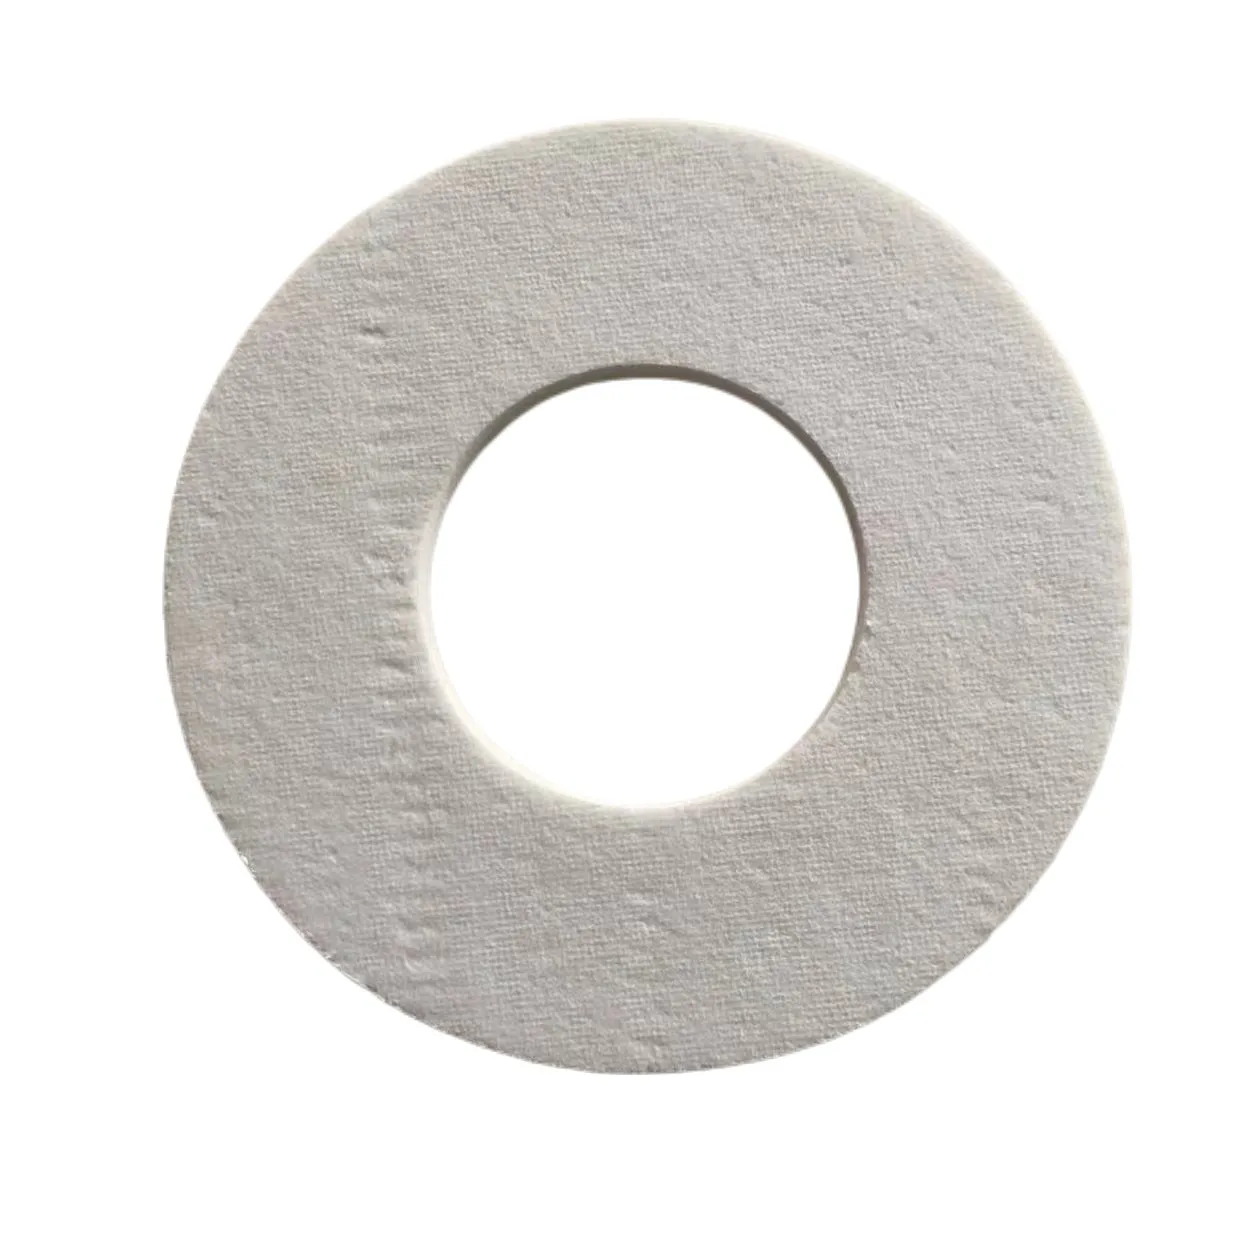 Factory Supply Refractory Insulation Thermal Ceramic Fiber Paper 1260c ceramic fiber paper